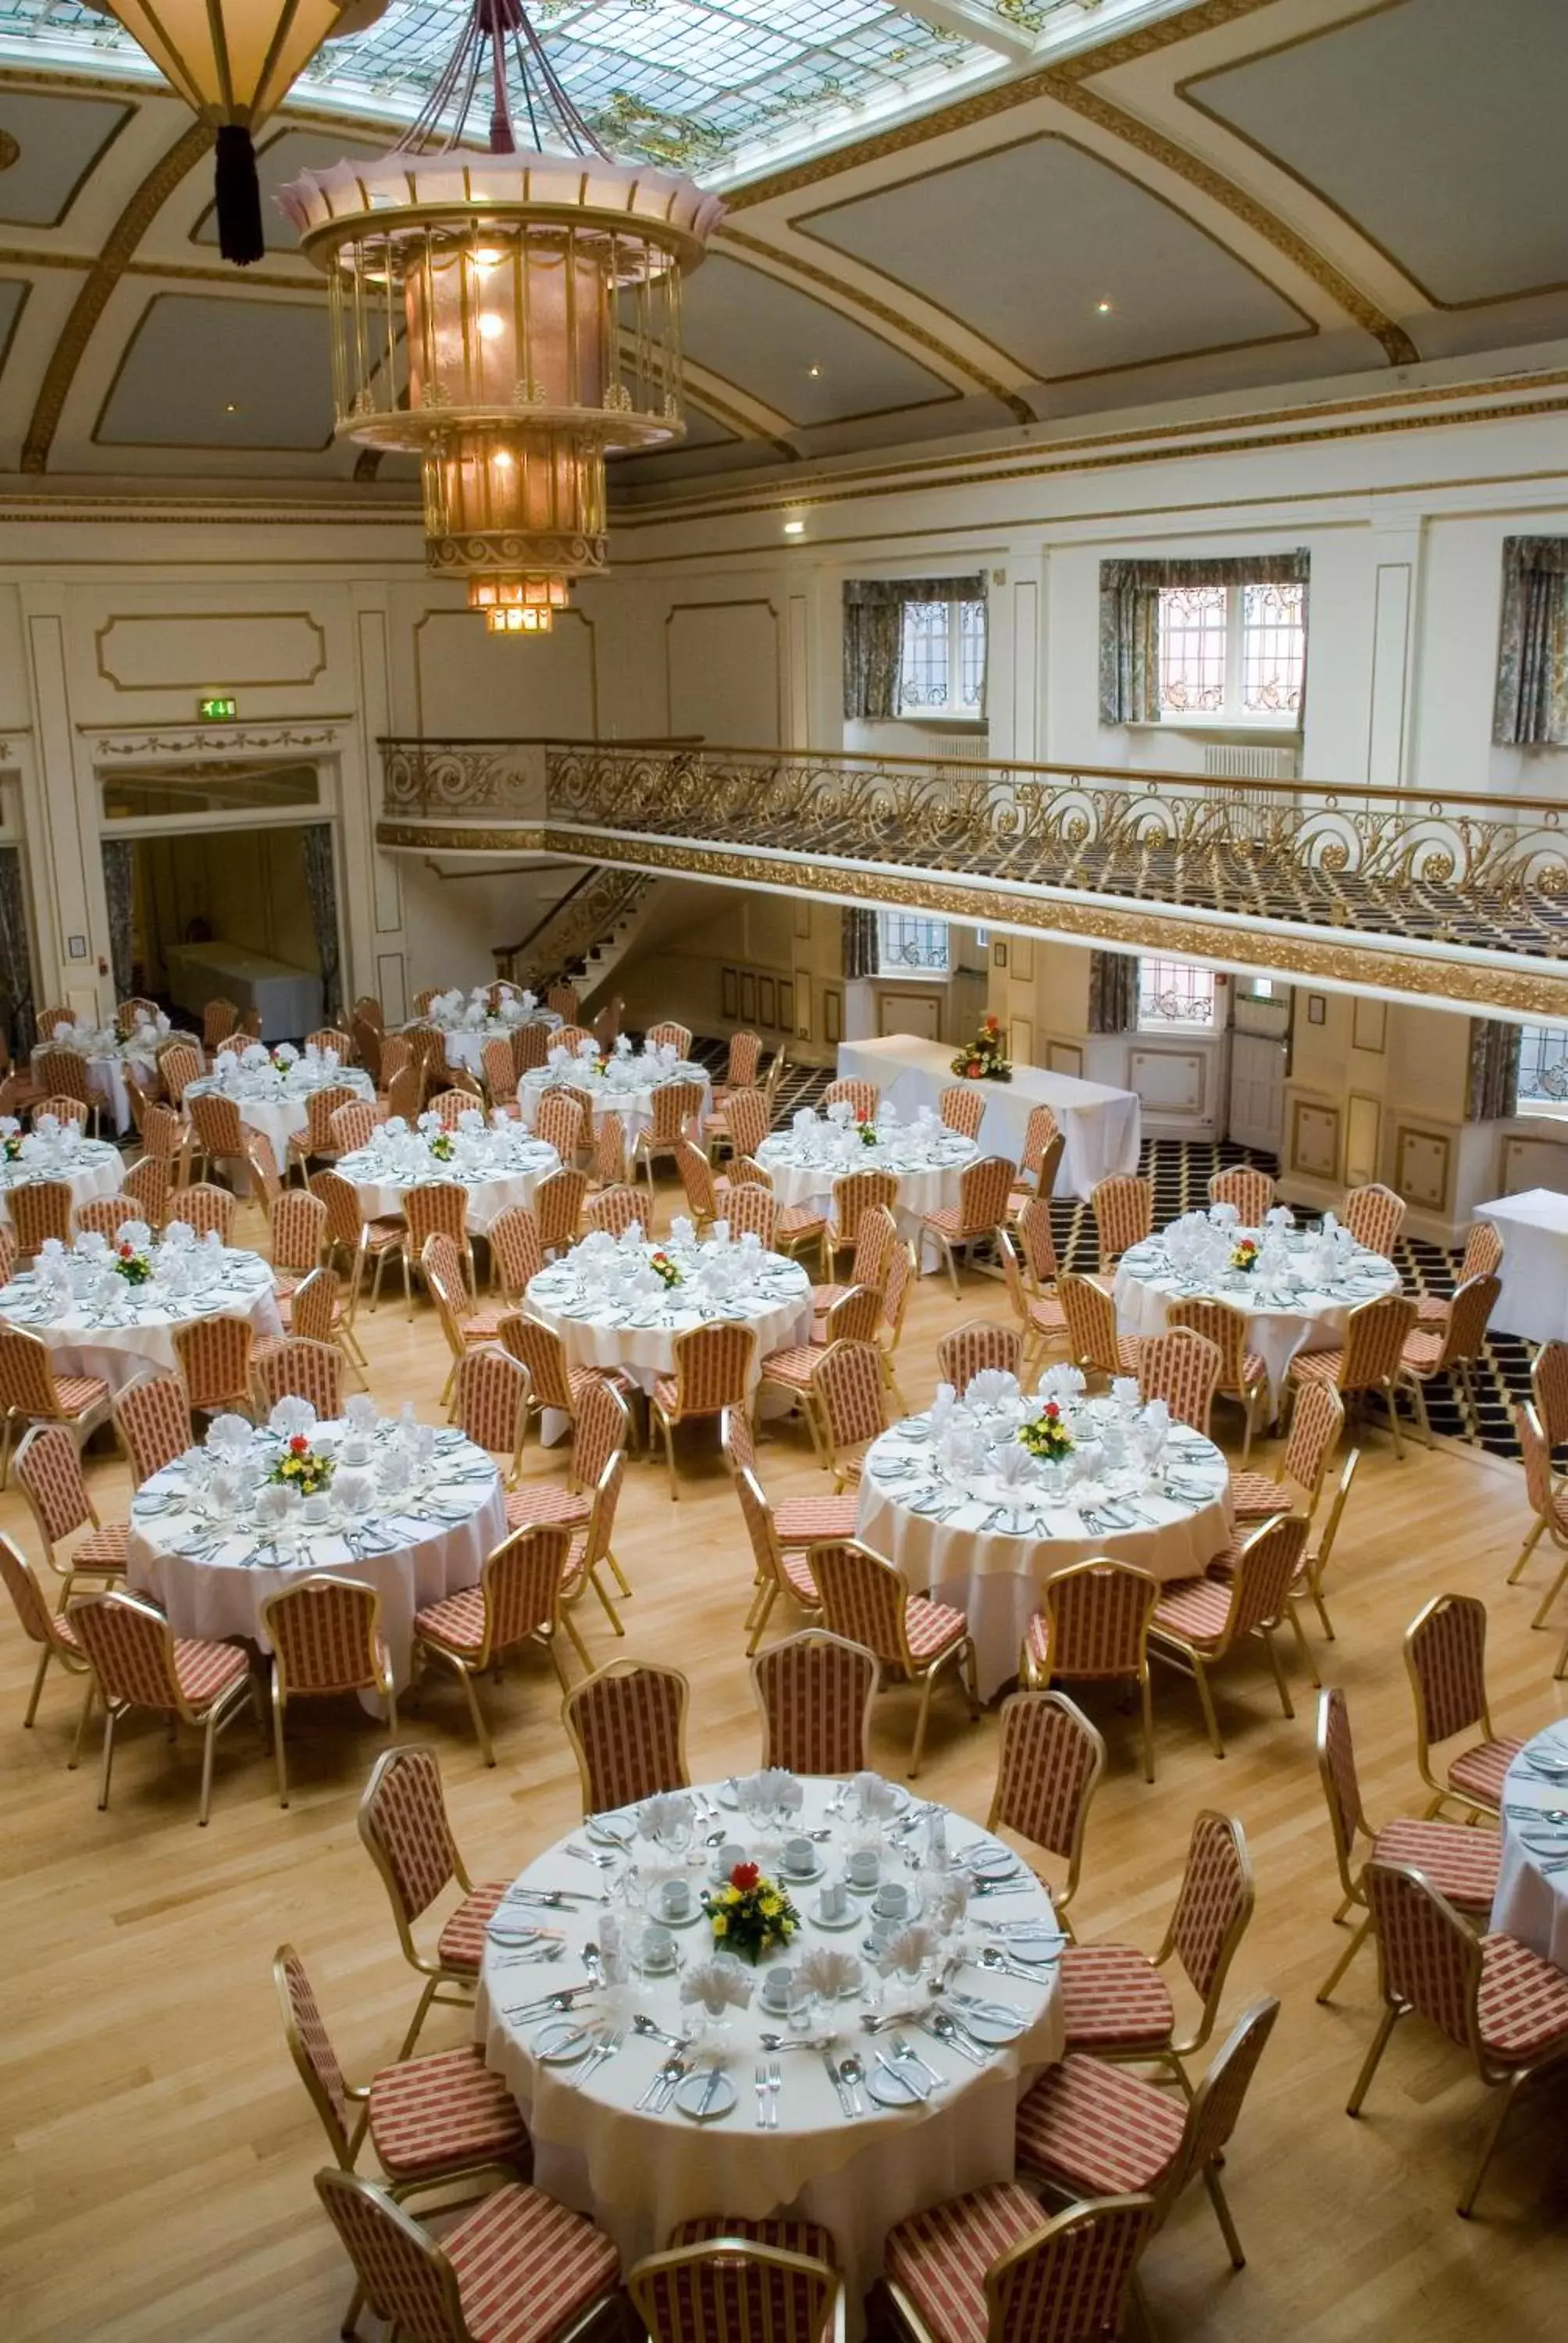 Banquet/Function facilities, Banquet Facilities in Prince Of Wales Hotel